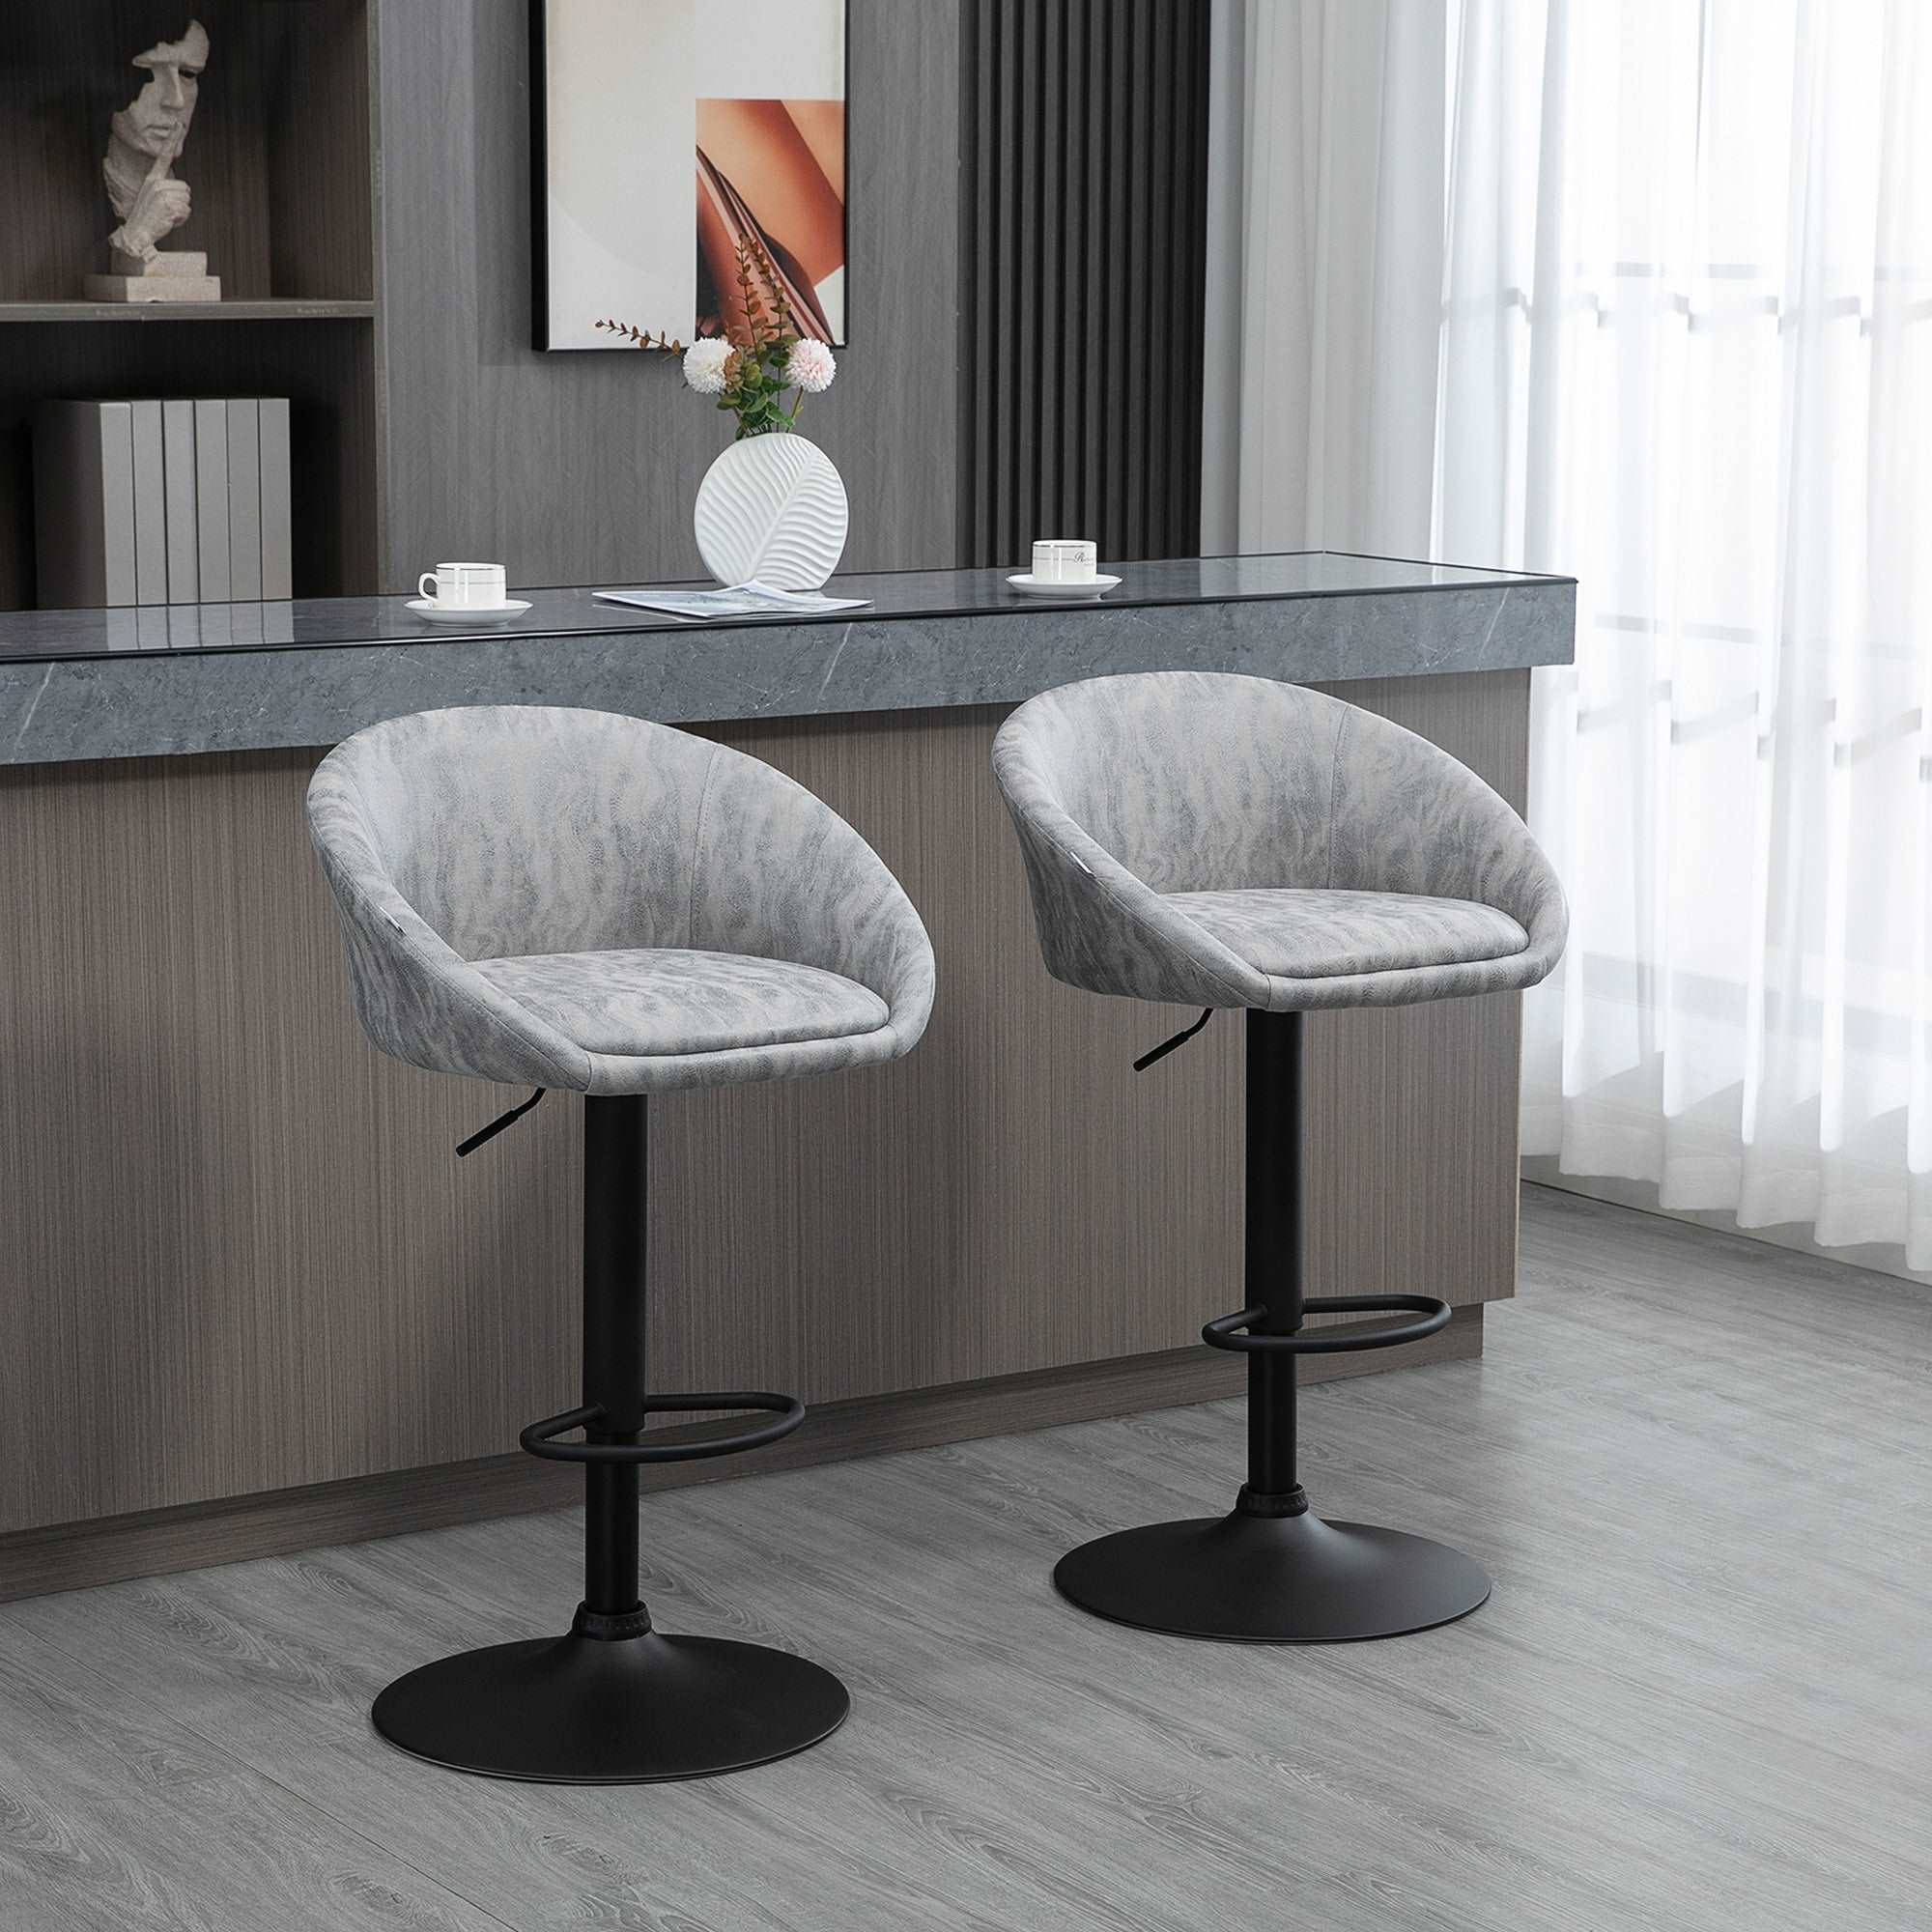 Modern Adjustable Bar Stools Set of 2, Swivel PU Leather Breakfast Barstools with Footrest Armrests Back, for Kitchen Counter Light Grey  AOSOM   